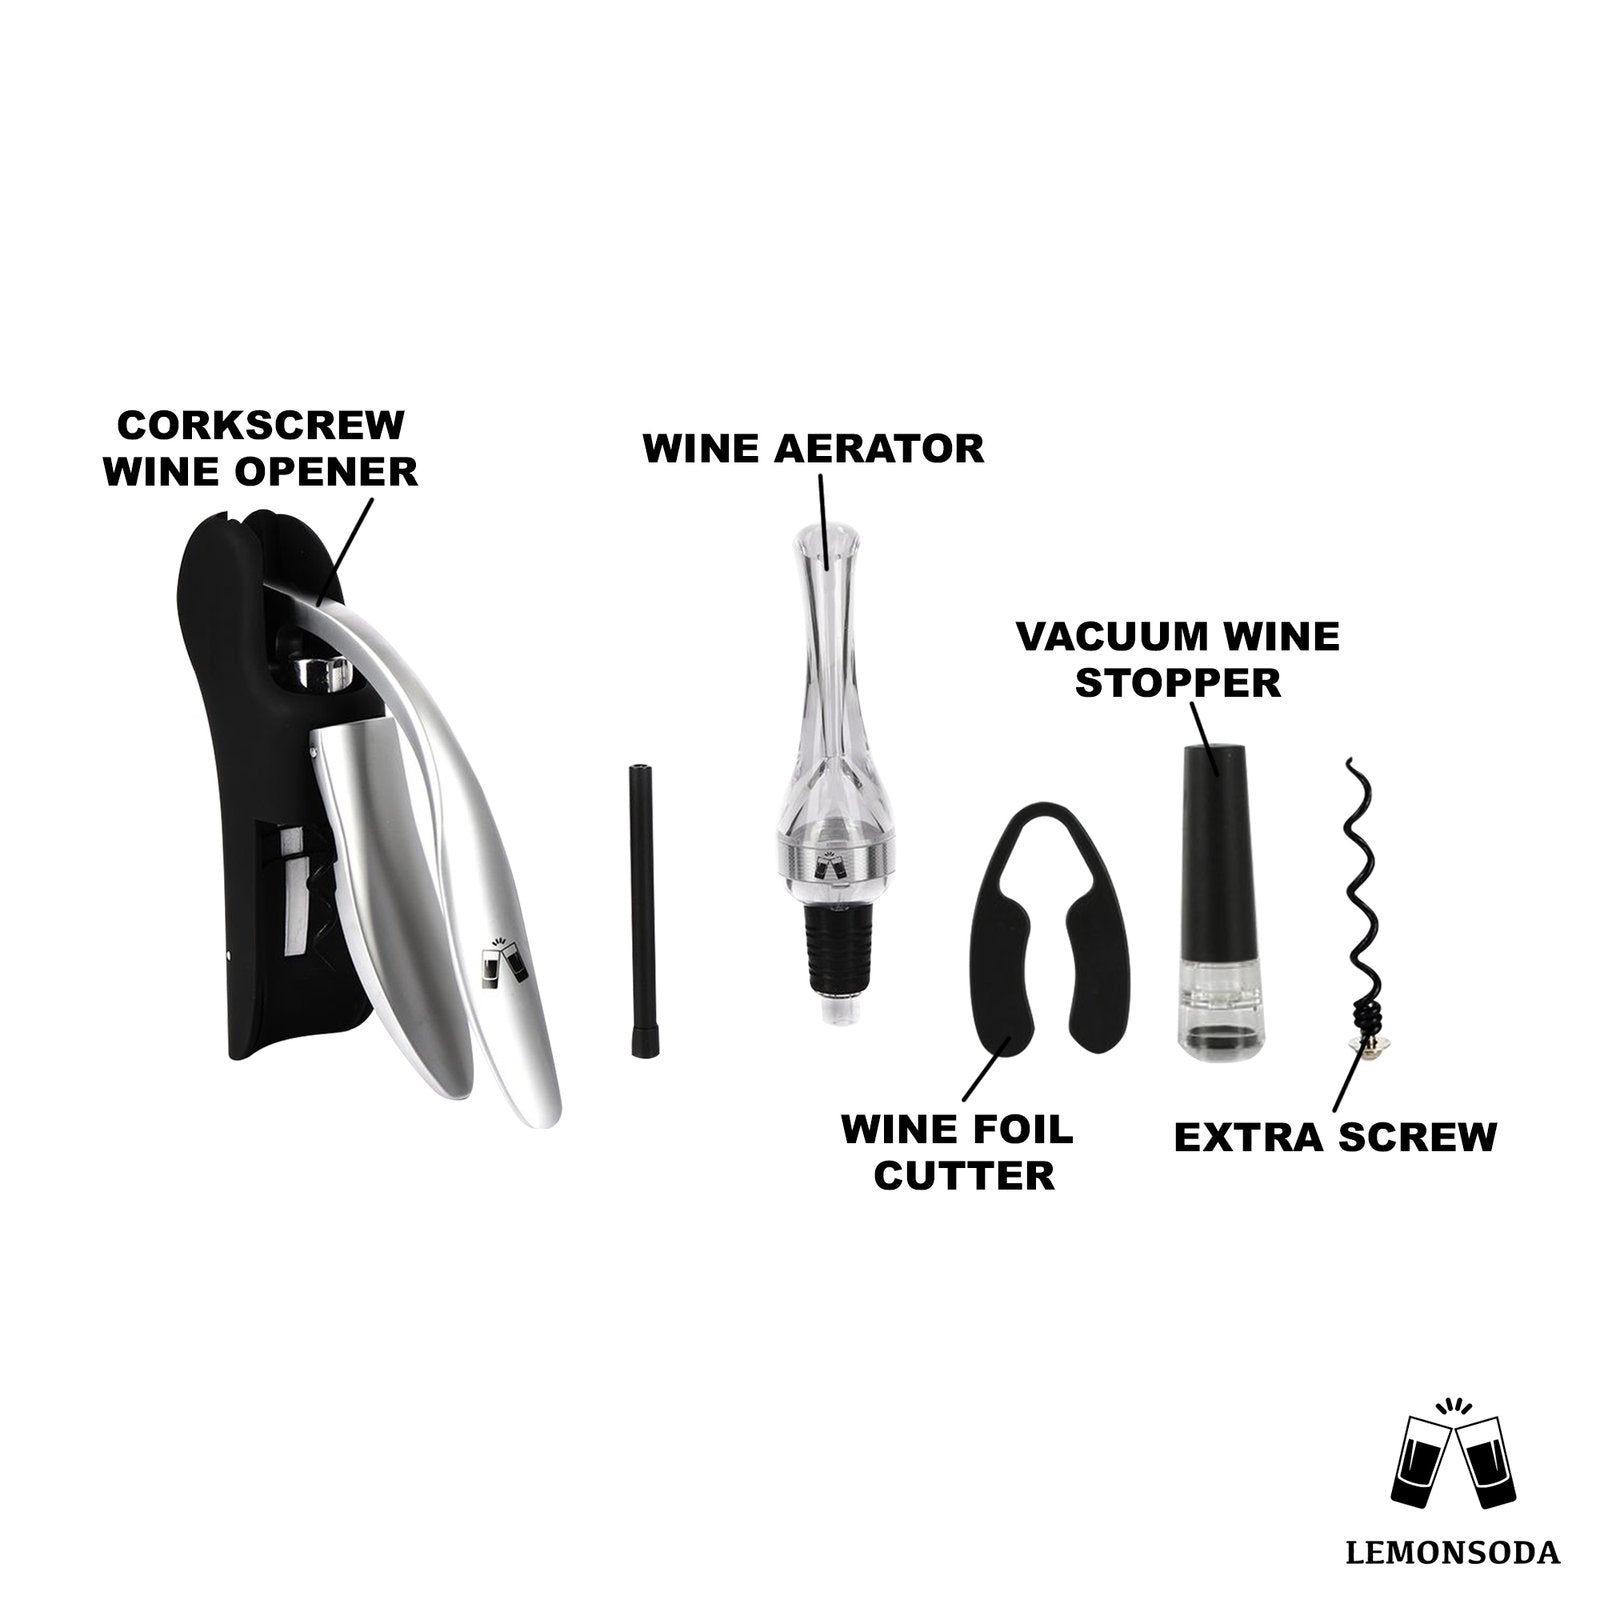 Corkscrew Wine Opener, Wine Aerator, Vacuum Wine Stopper, Wine Foil Cutter, Extra Screw